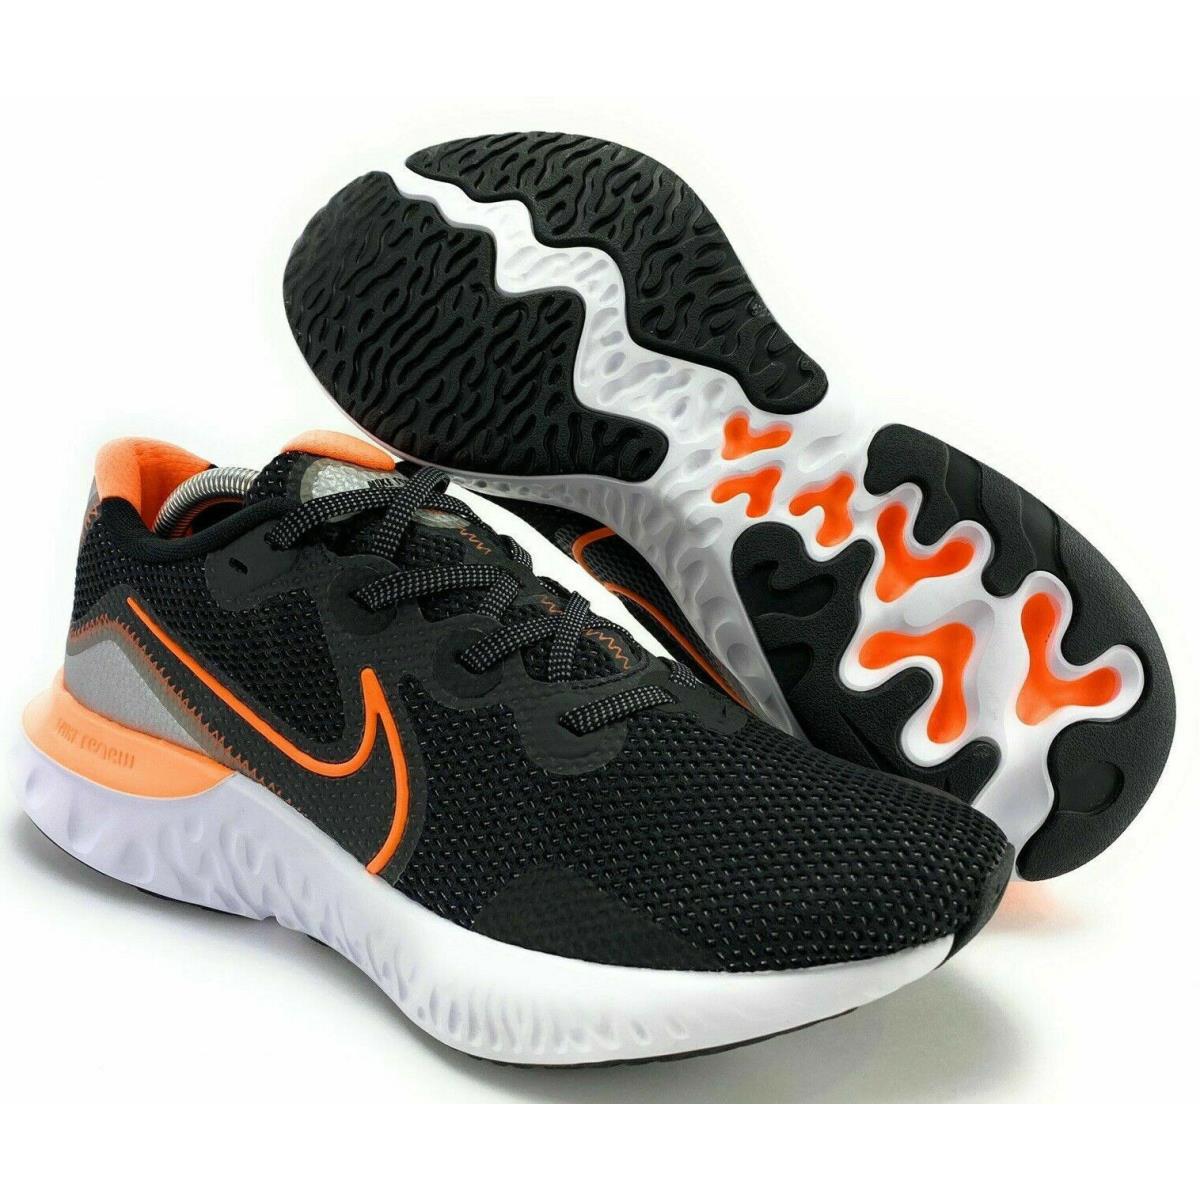 Nike Renew Run Mens Running Shoes Size: US-8 Sneakers CK6357 001 Black/orange